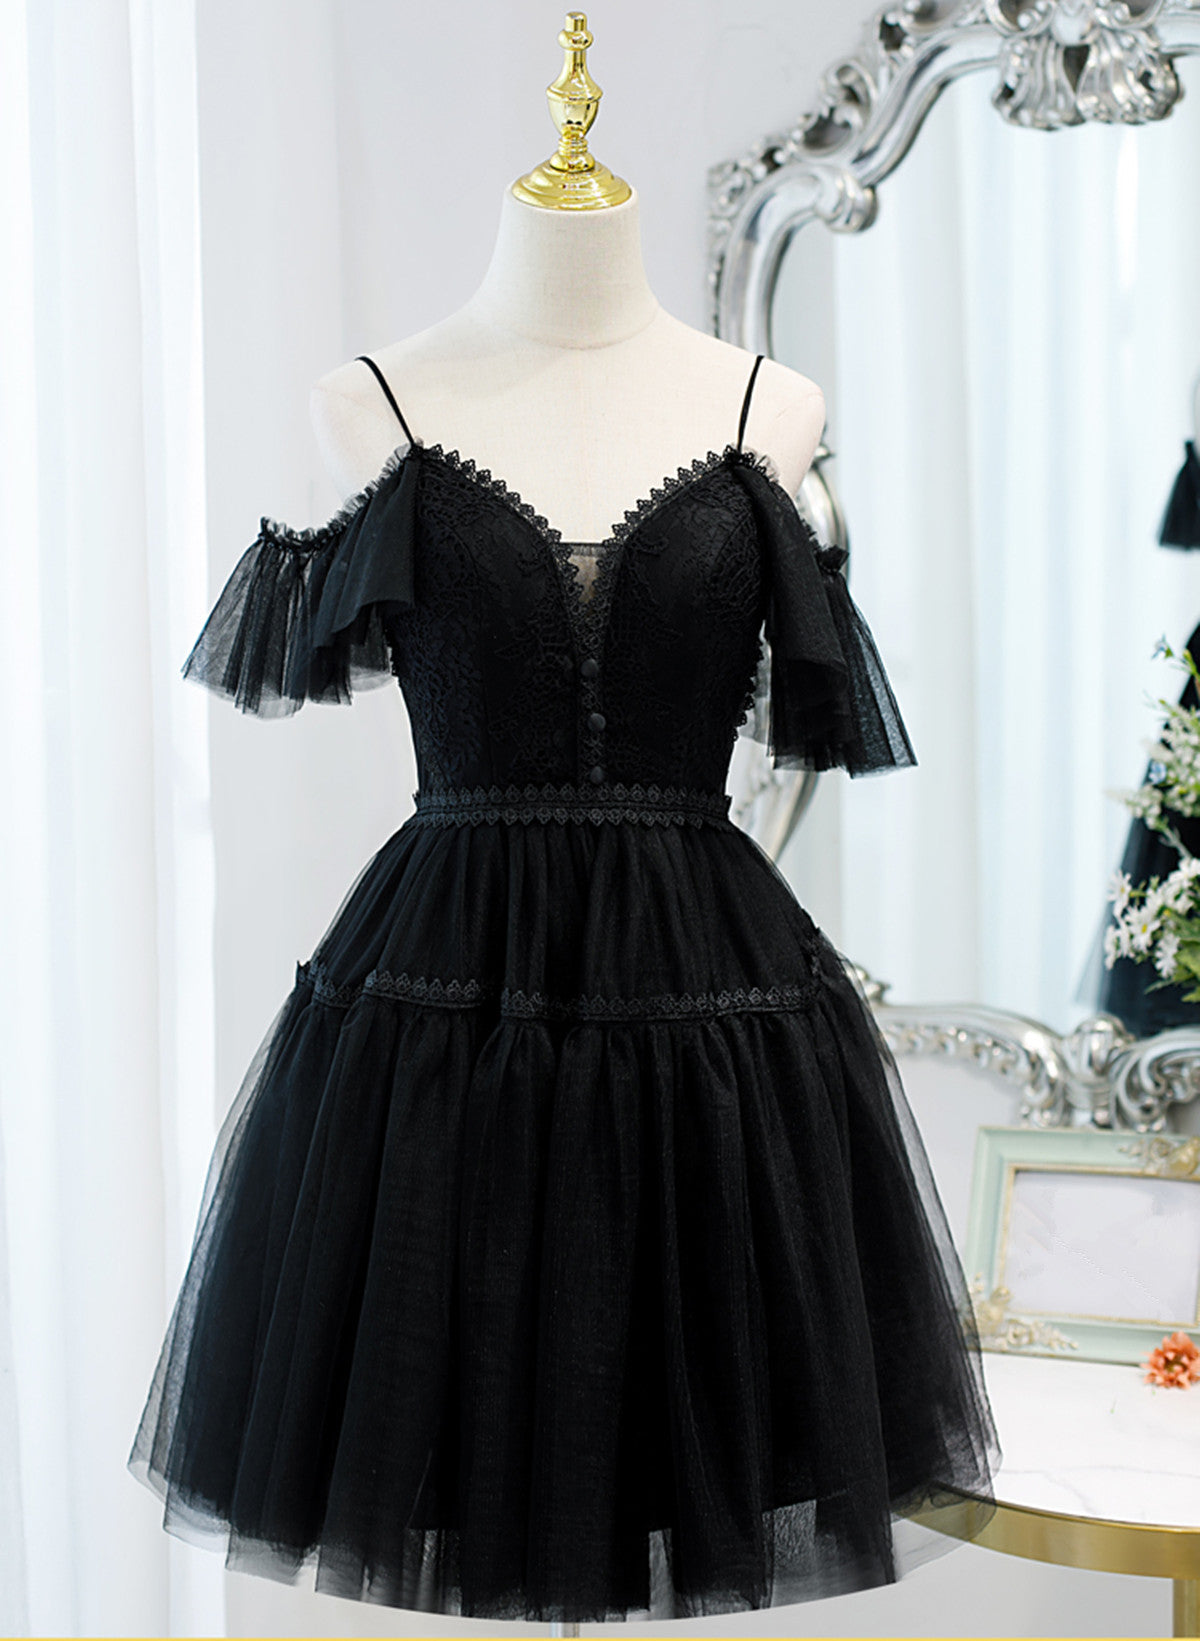 Bridesmaids Dresses On Sale, Black Sweetheart Straps Tulle Homecoming Dress, Black Off Shoulder Prom Dress